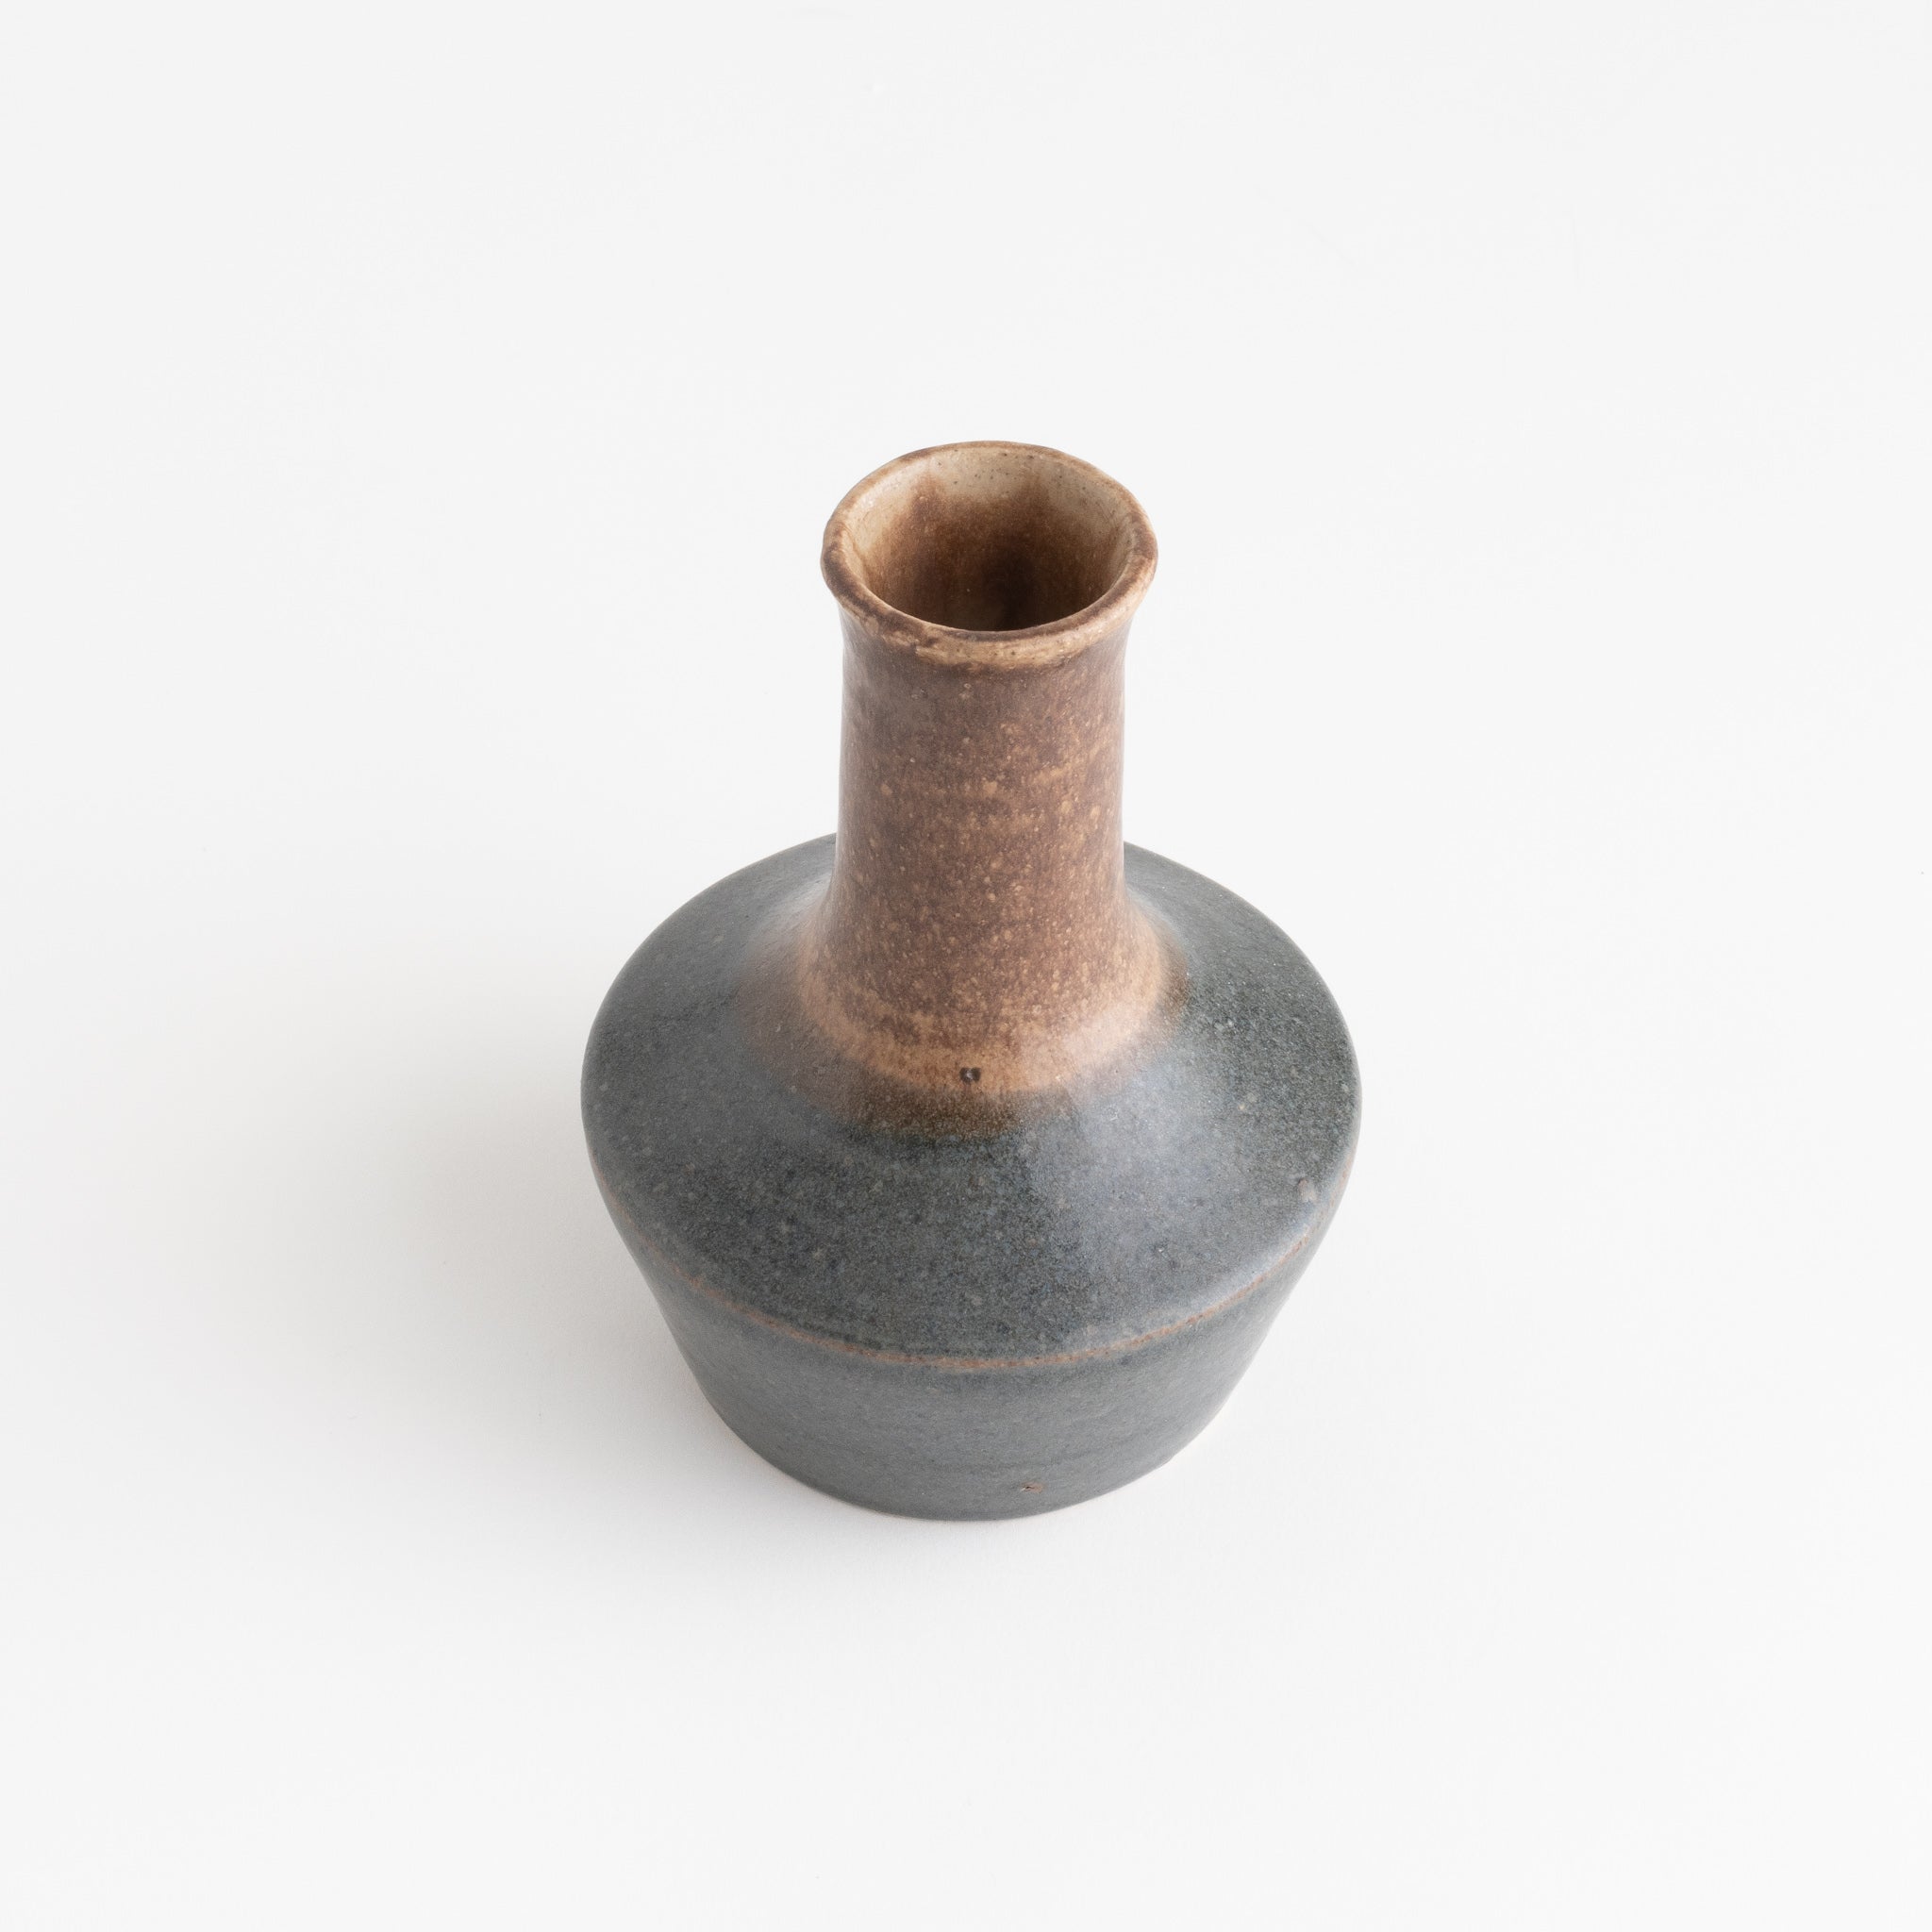 Rustic Handmade Ceramic Vase with Earth-Toned Glaze - Homekeep Market